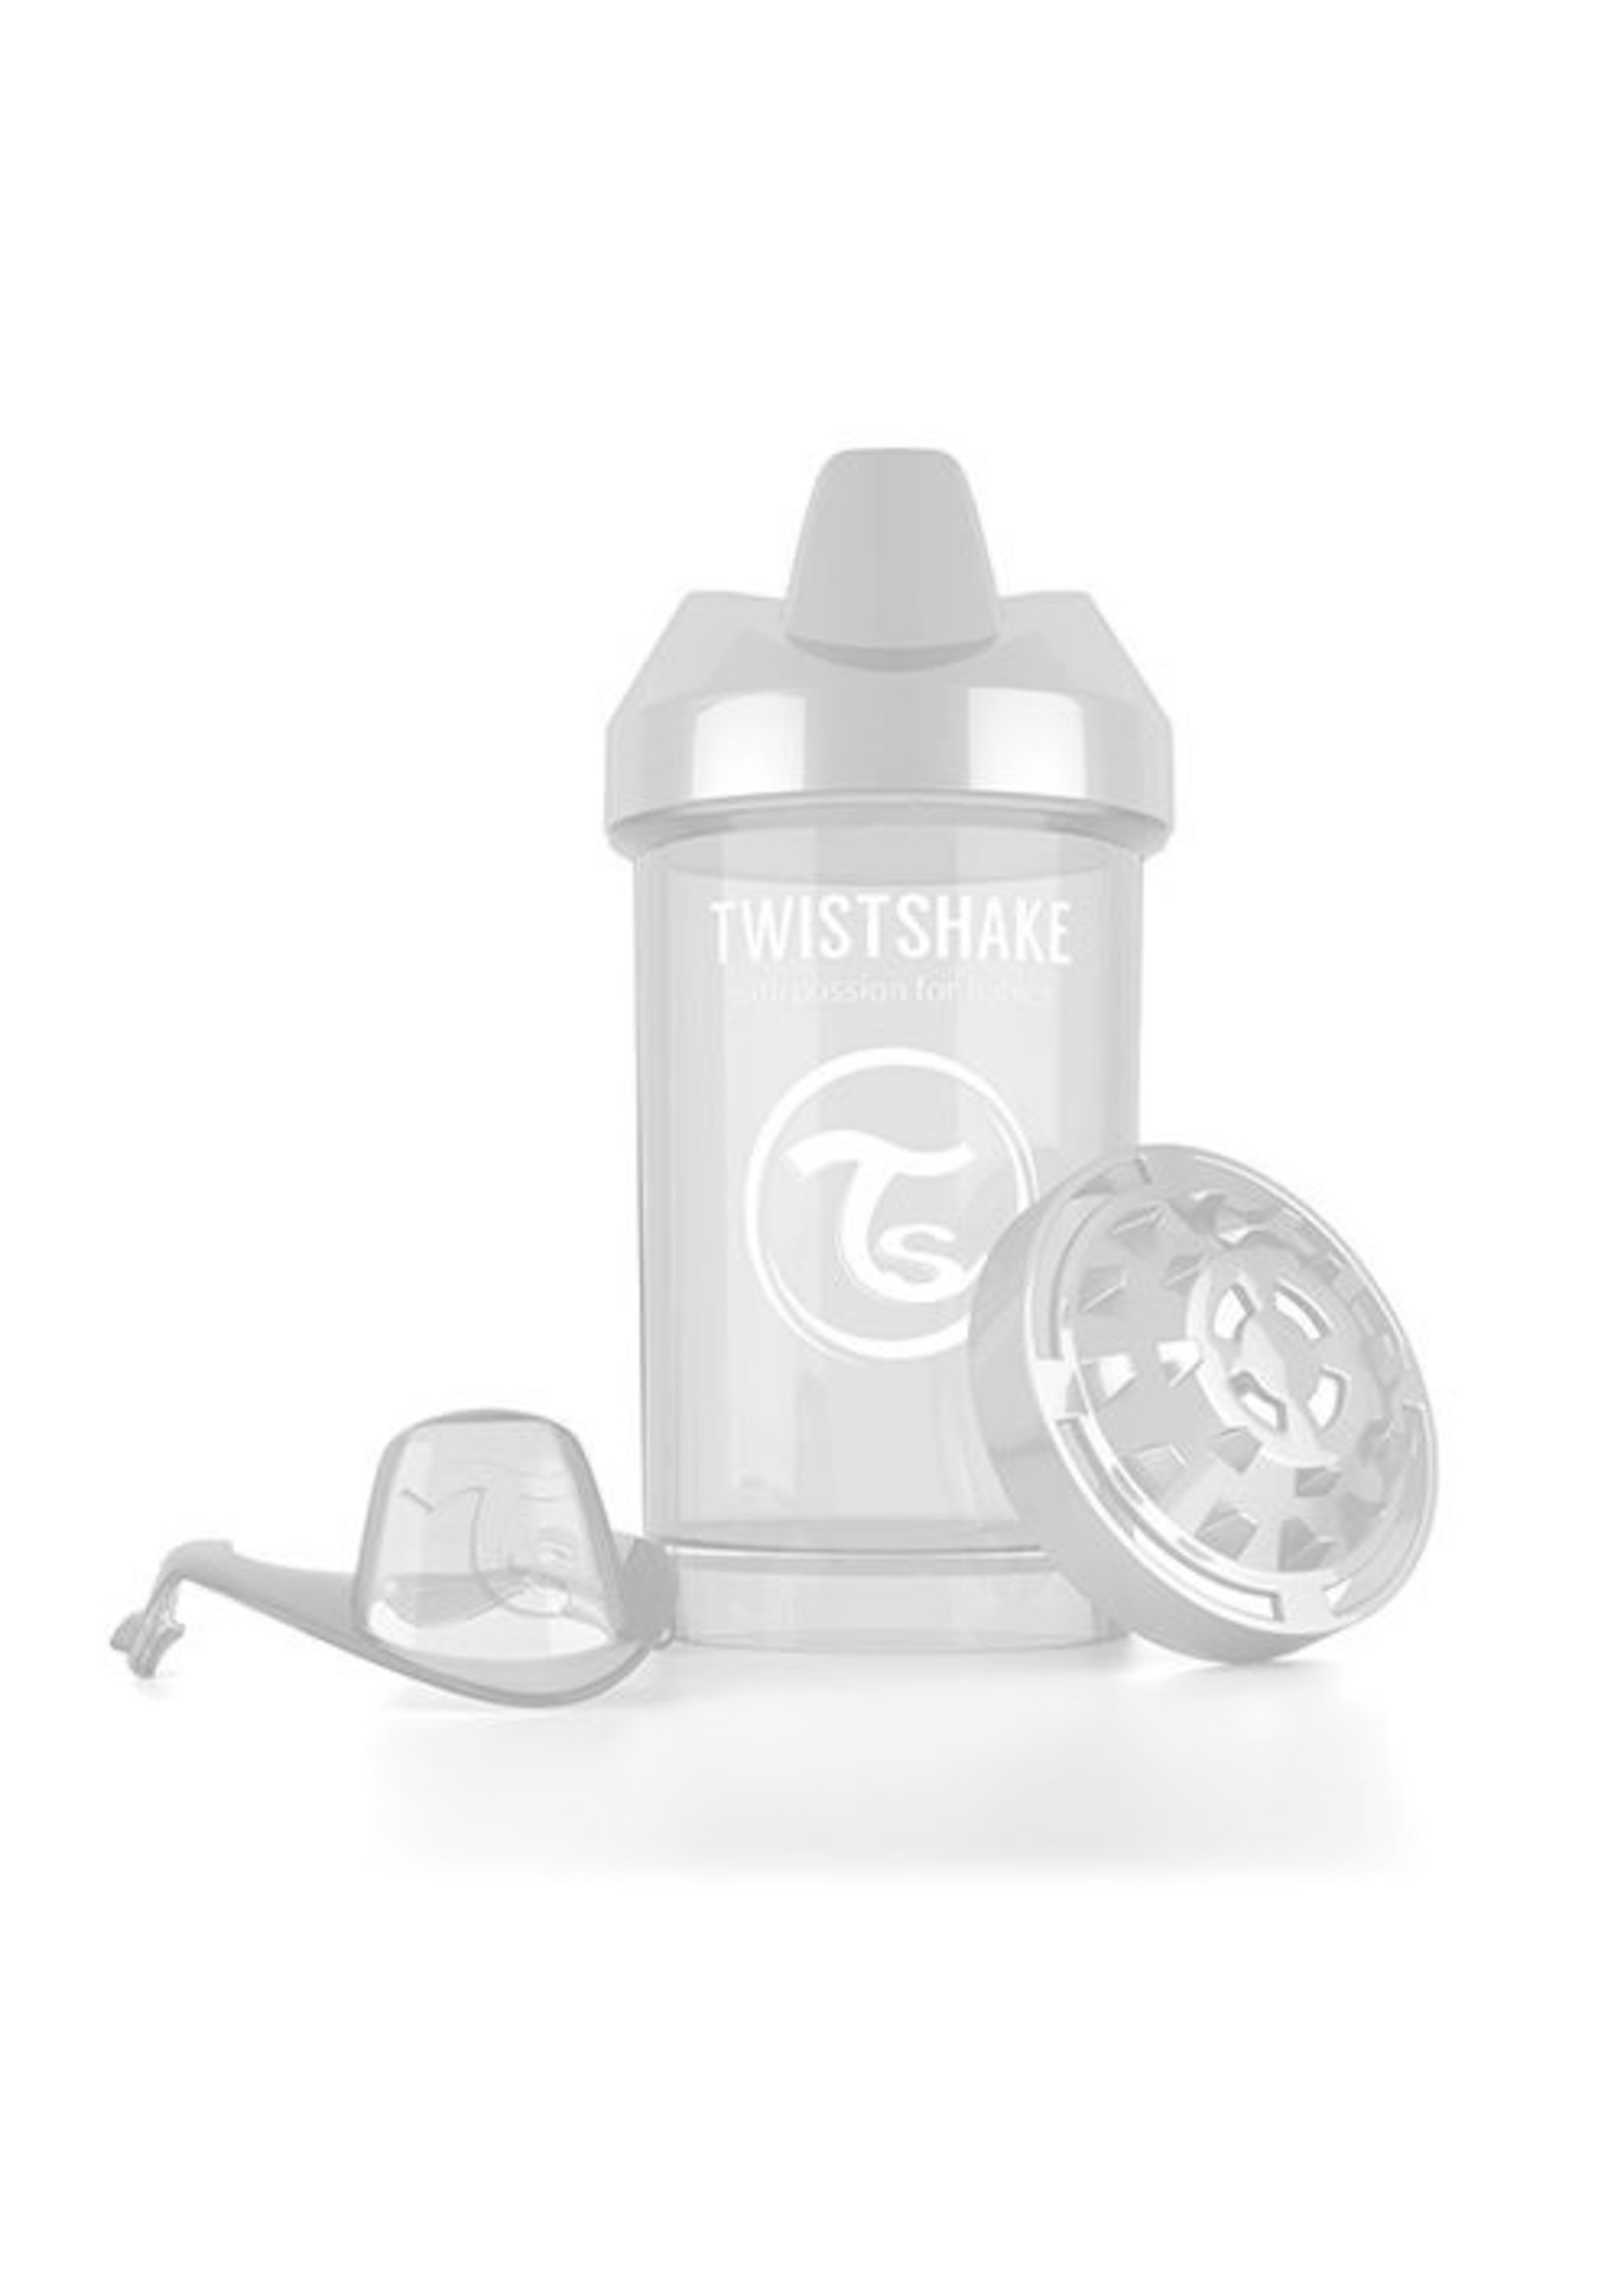 Twistshake Twistshake drinkbeker wit 300ml